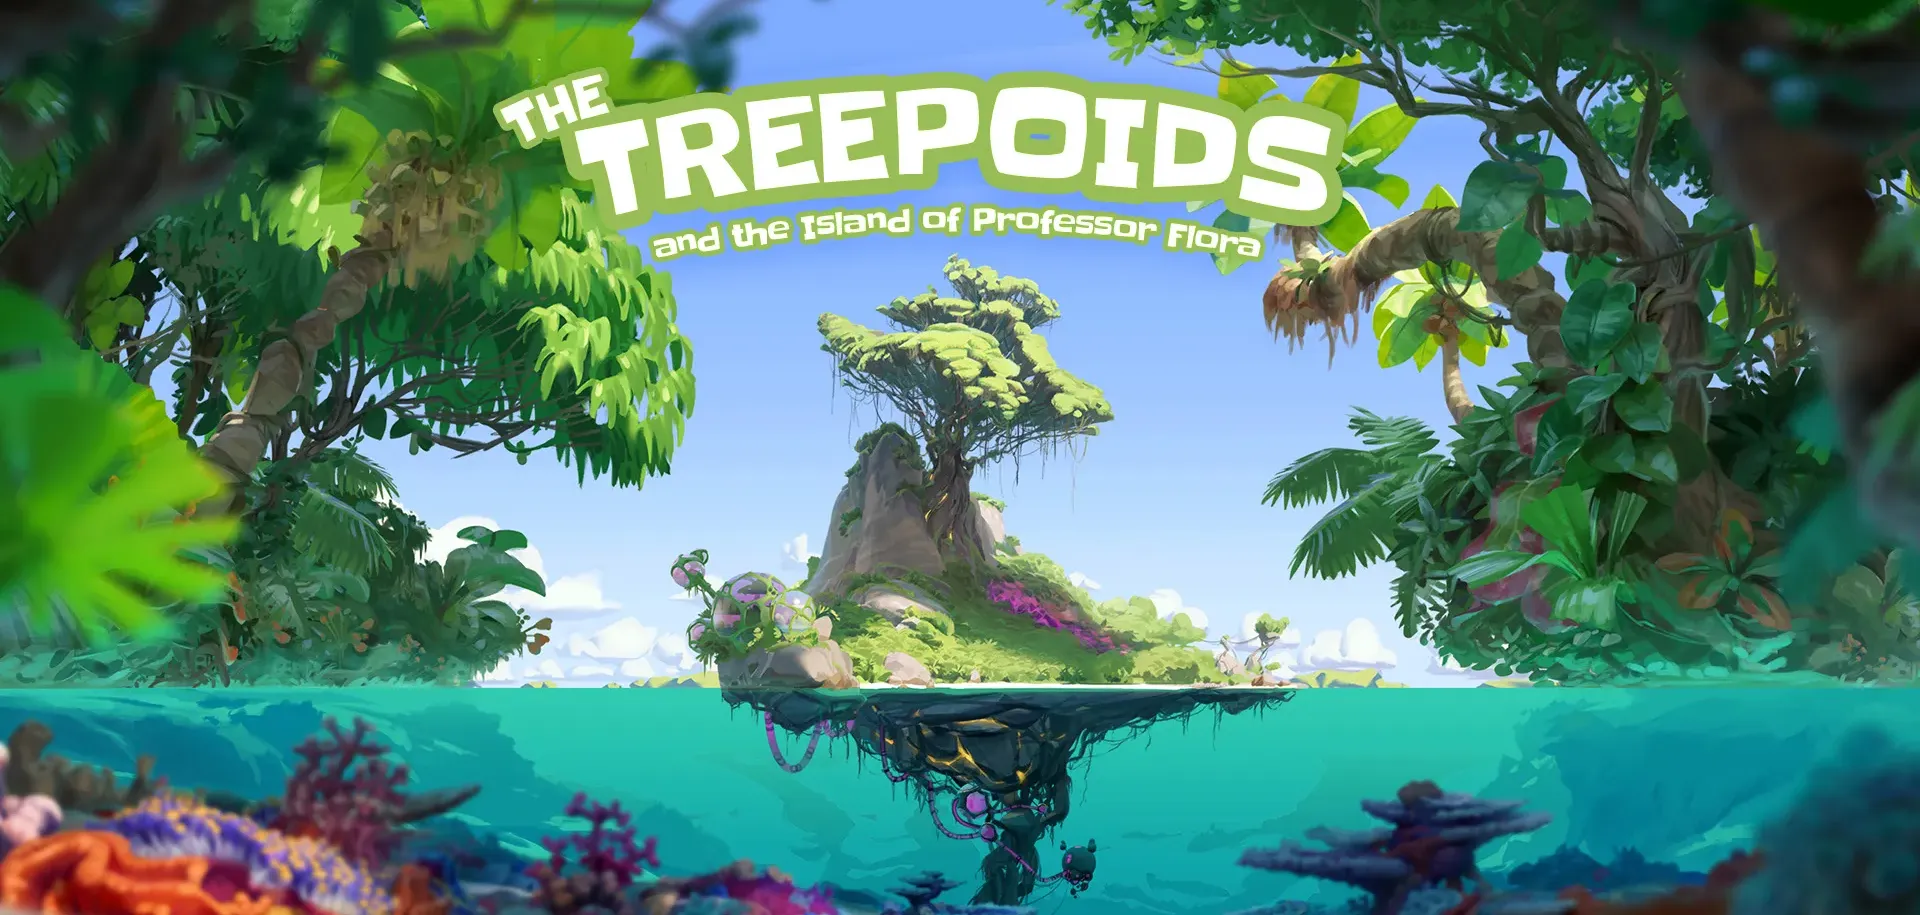 PSYCRAFT - #SupernaturalGames - hand-painted adventure games - "The Treepoids" - Flora Bora startcreen